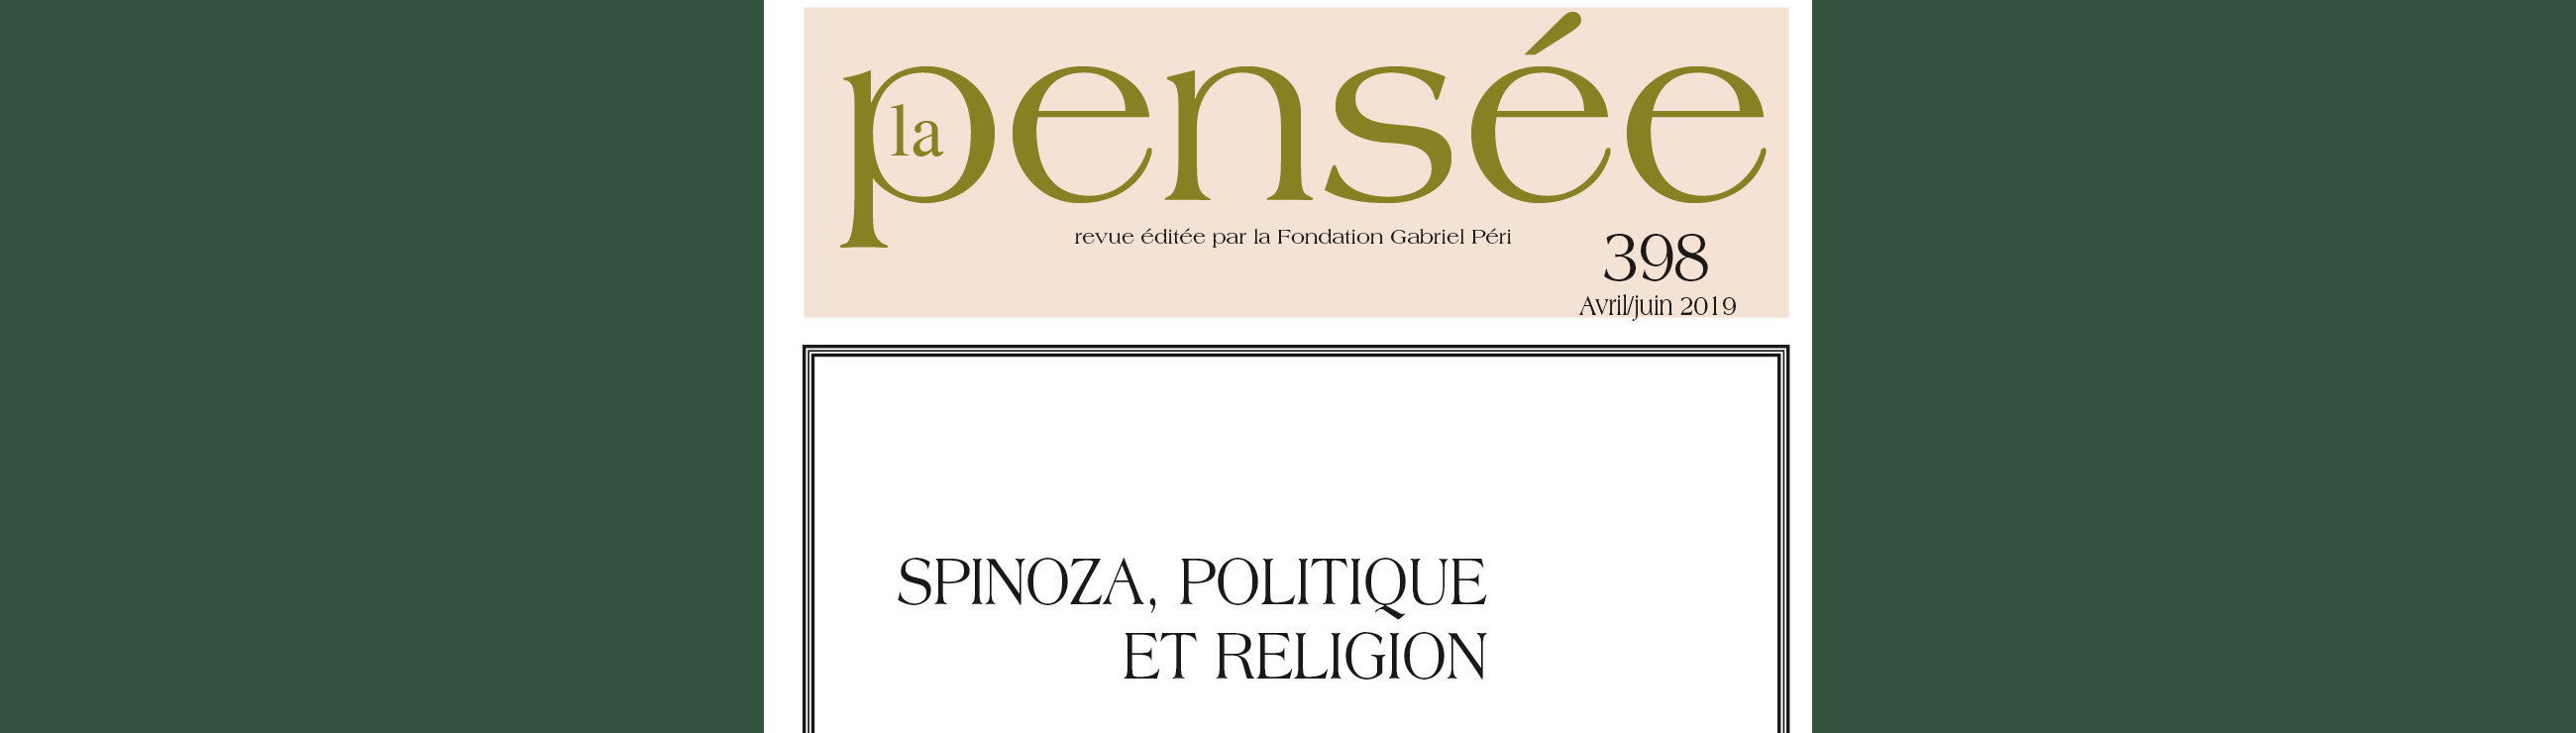 Spinoza, politique et religion